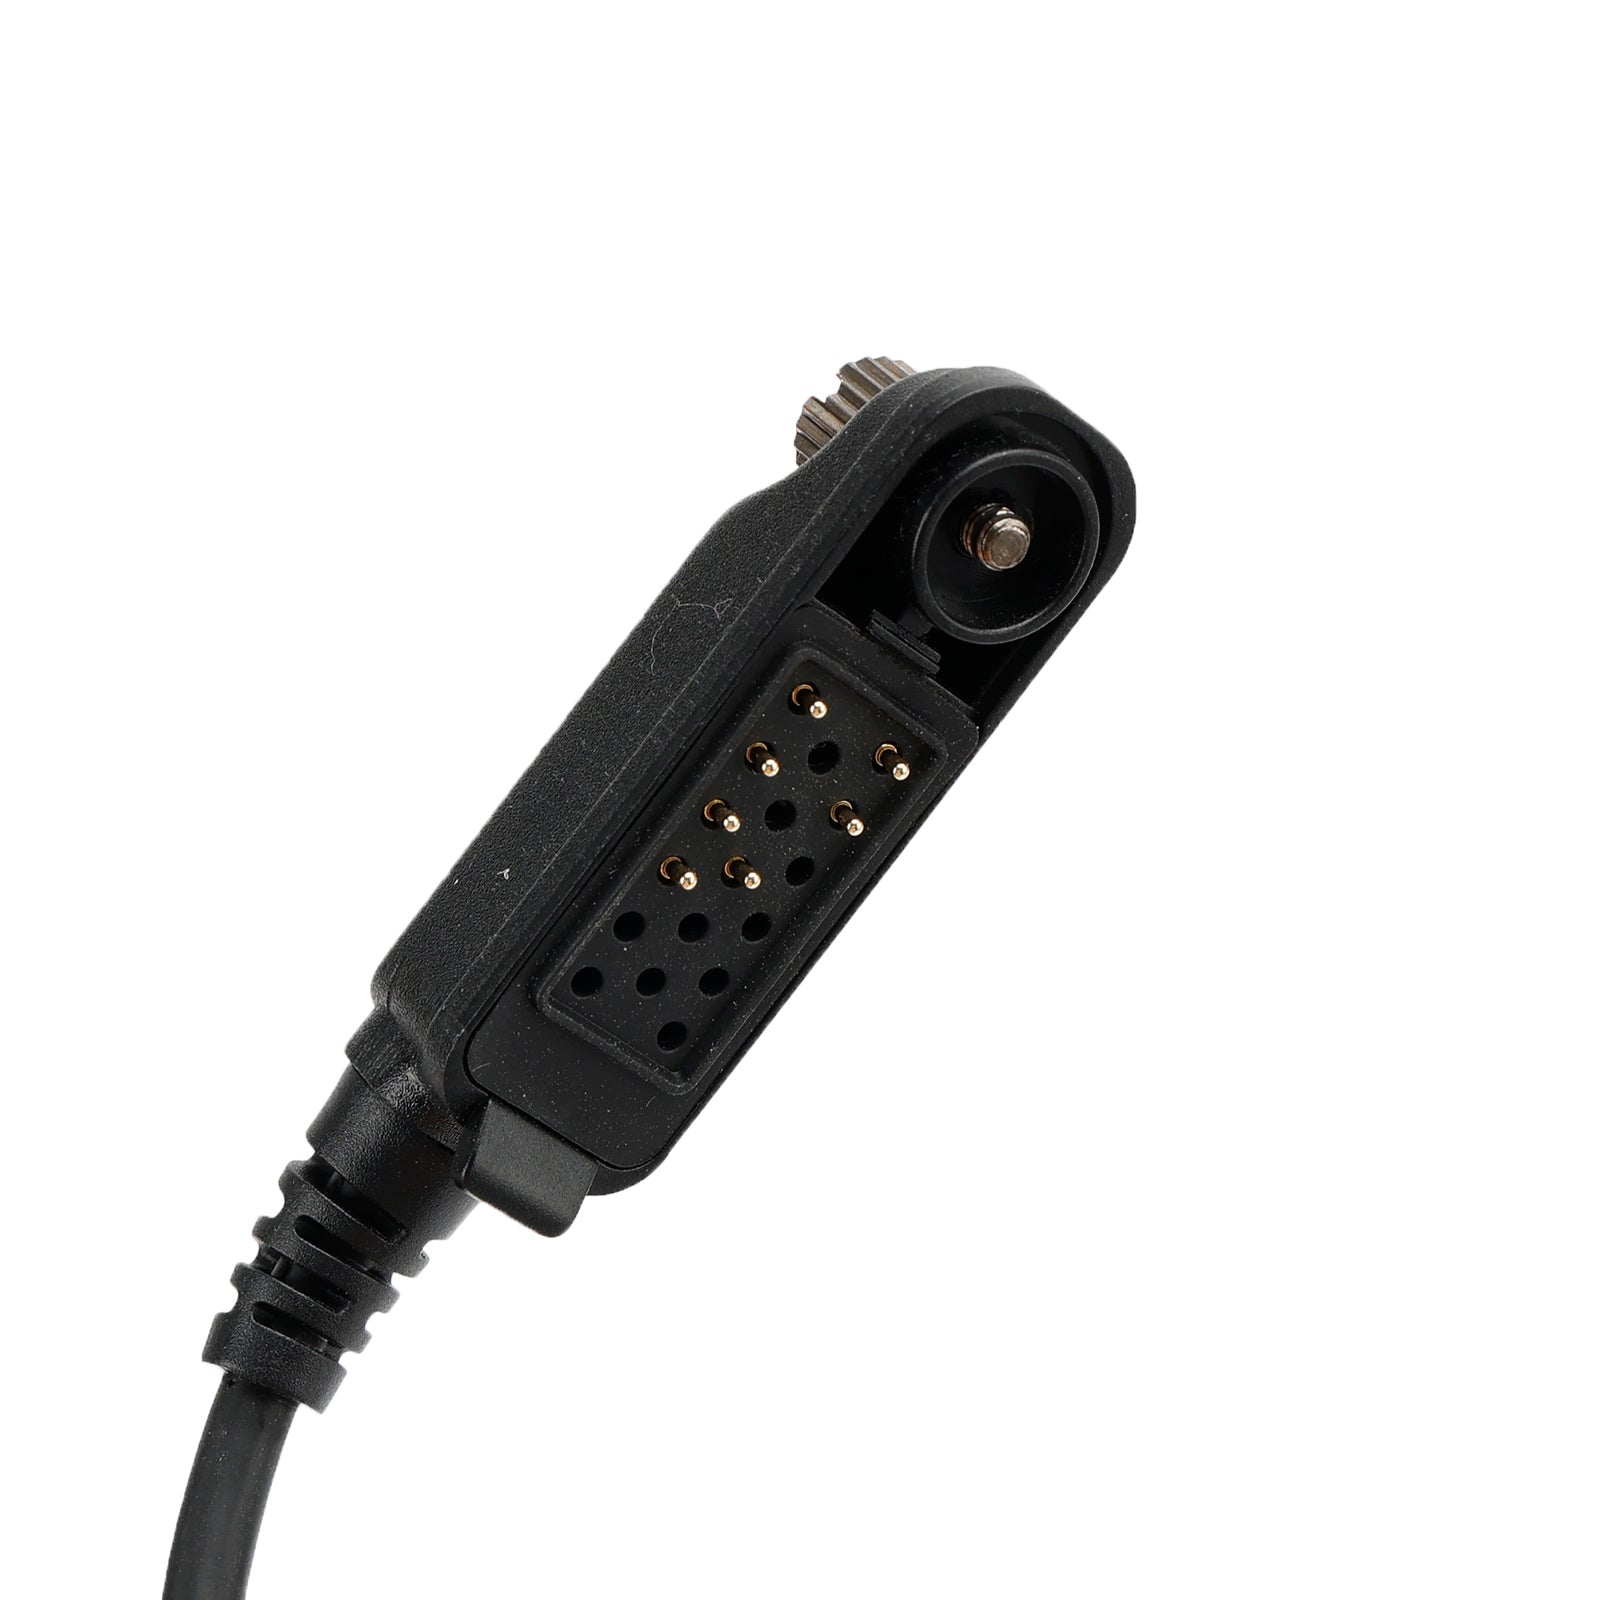 Spkeaker de microphone à main PH790-SM08, compatible avec la radio talkie-walkie Caltta PH790